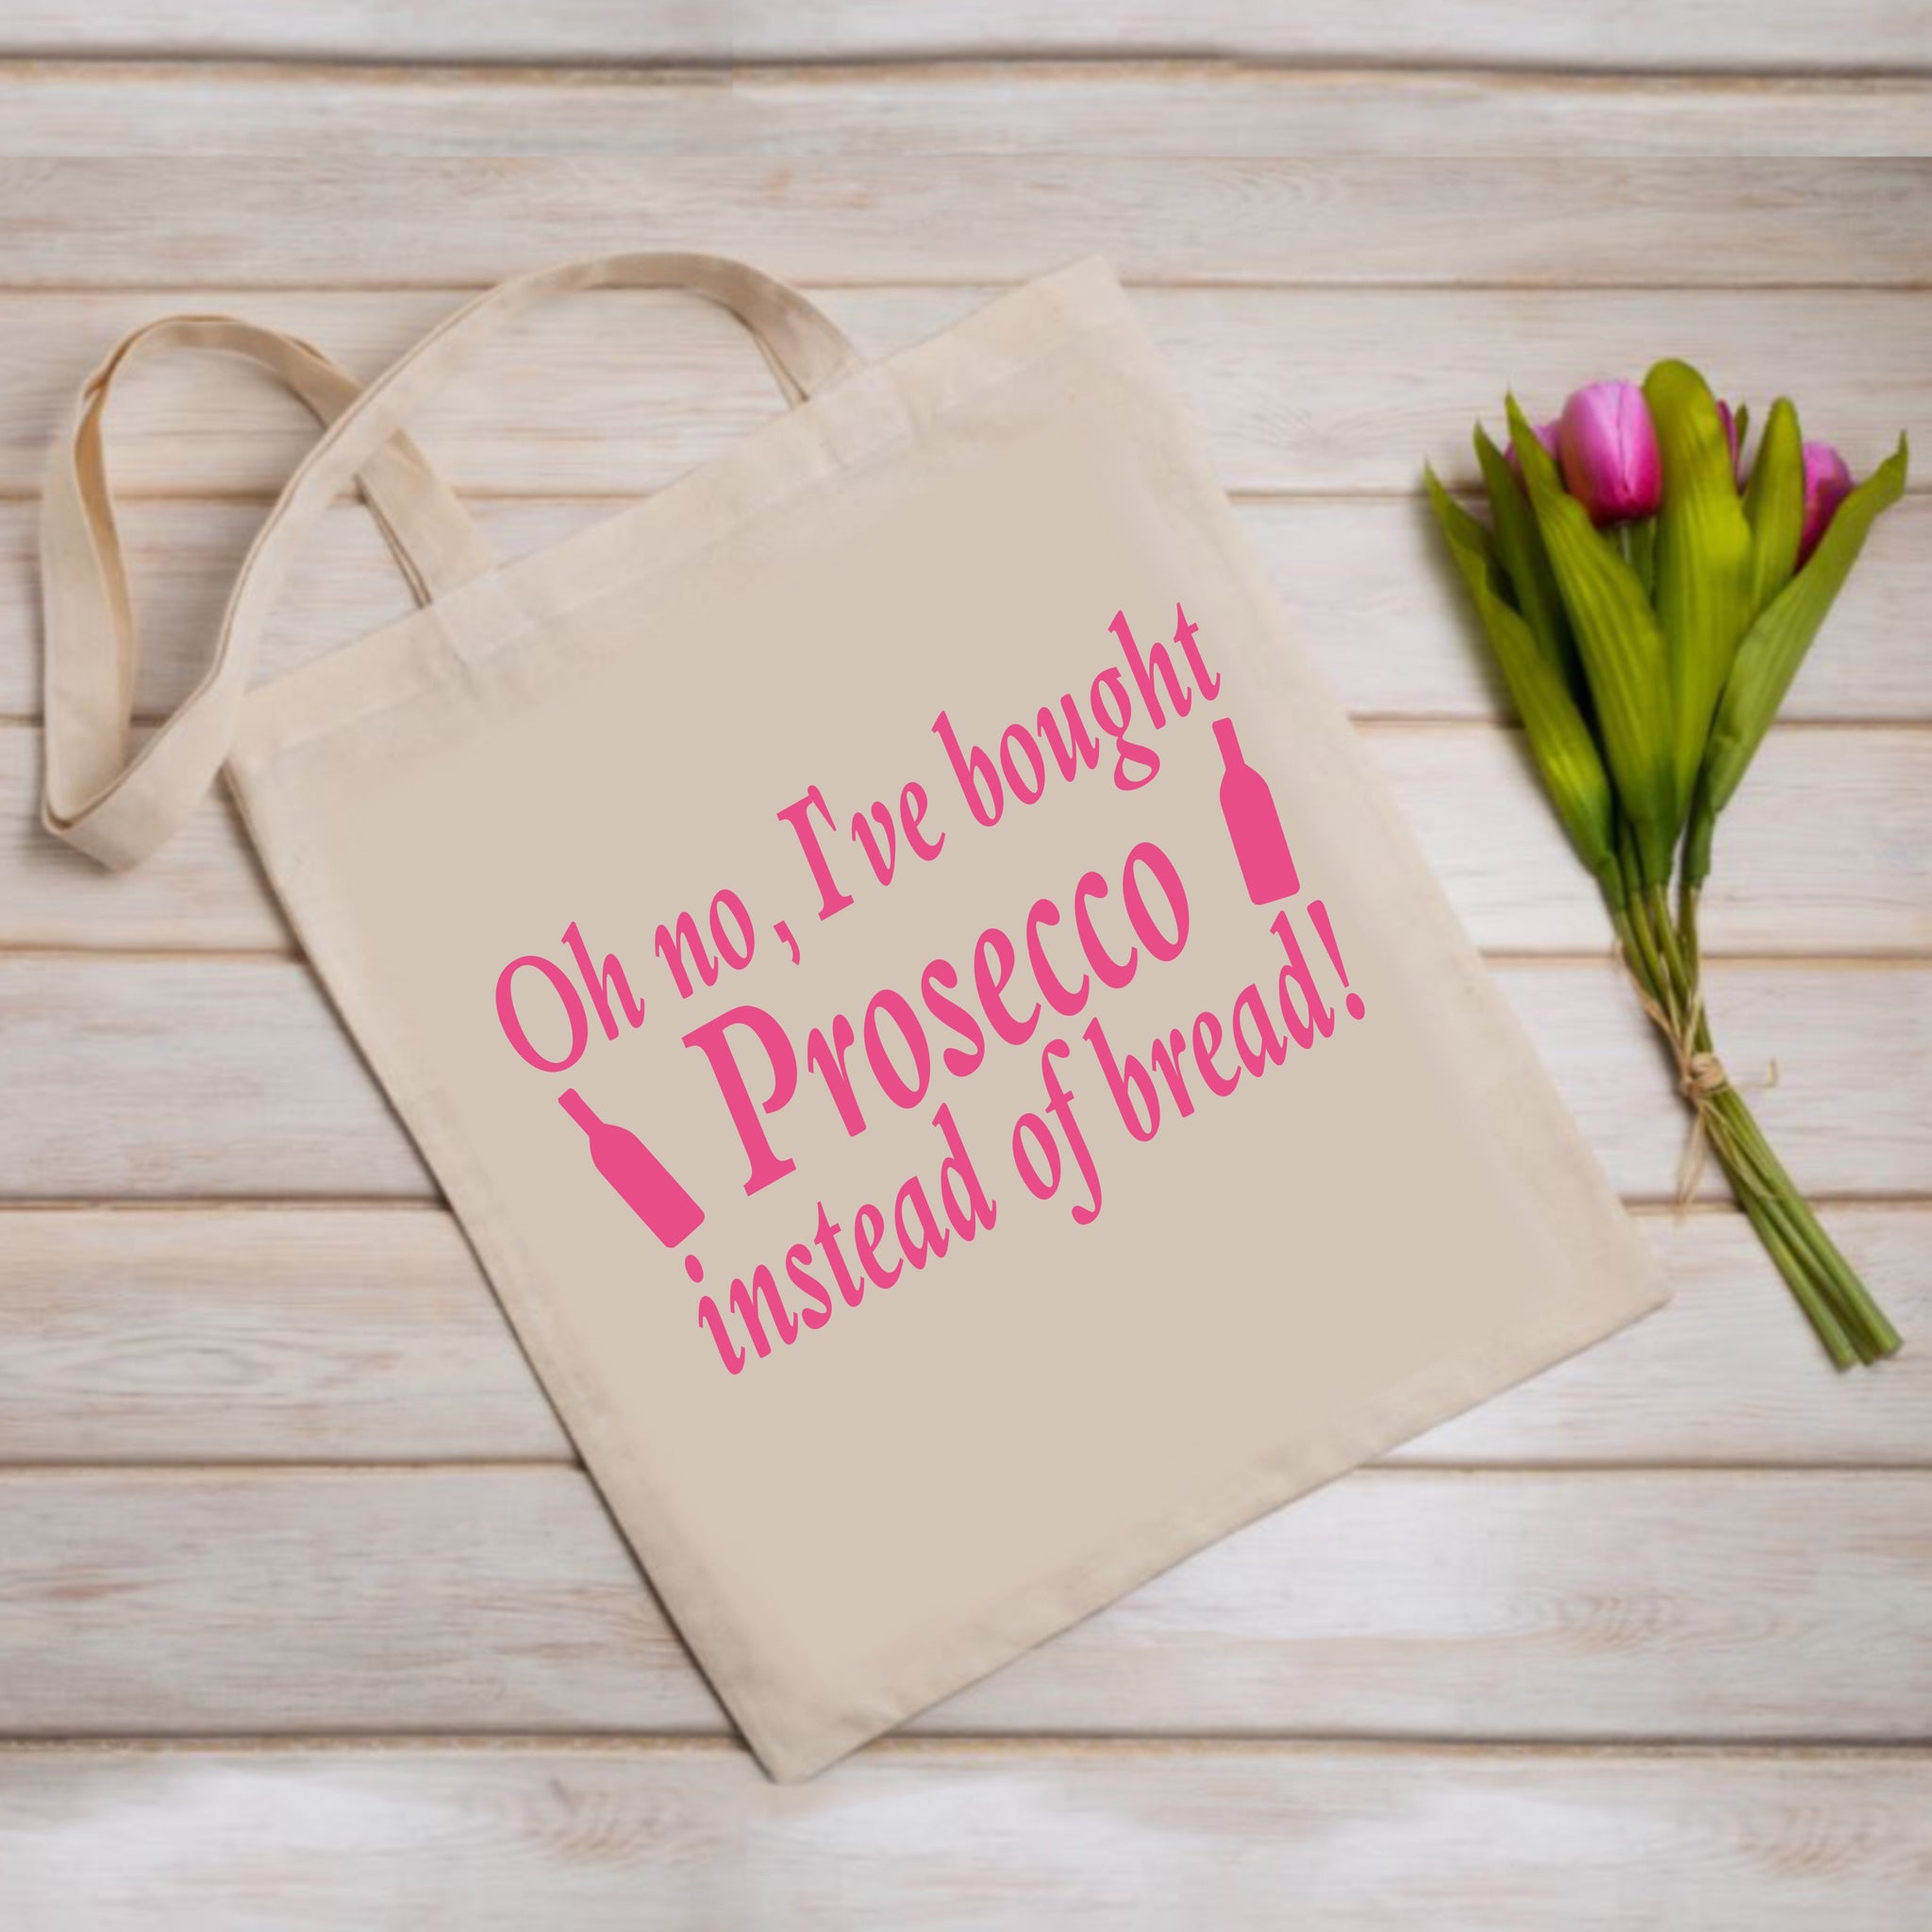 Oh no, I've bought Prosecco instead of Bread! | 43cm x 38cm | Cotton Tote Bag